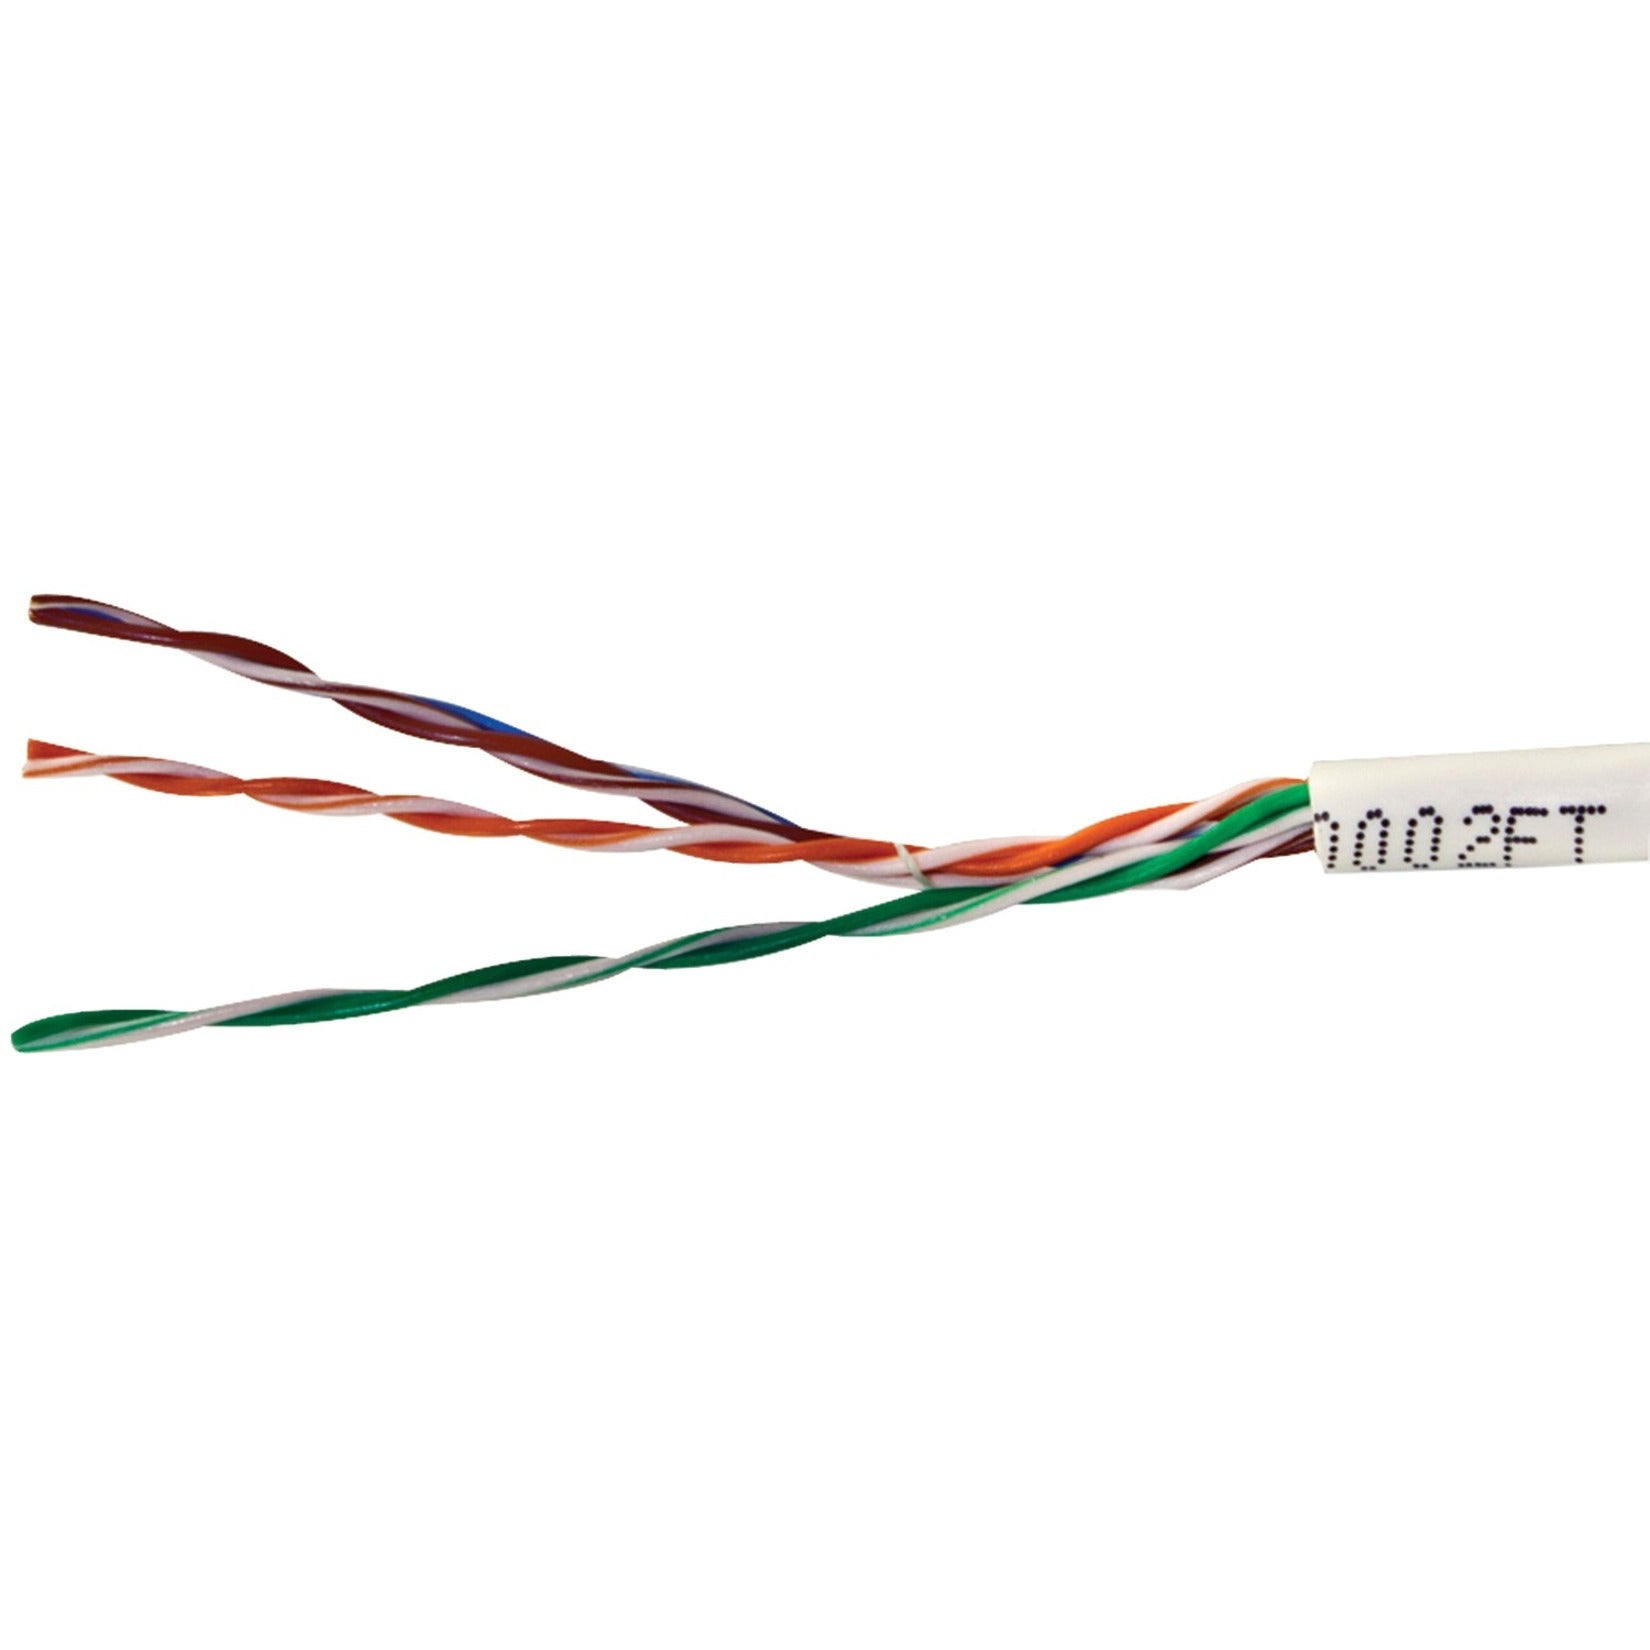 Vericom MBW5U-01441 CAT 5e U/UTP Solid Riser CMR Cable, 1000 FT Pull Box, White